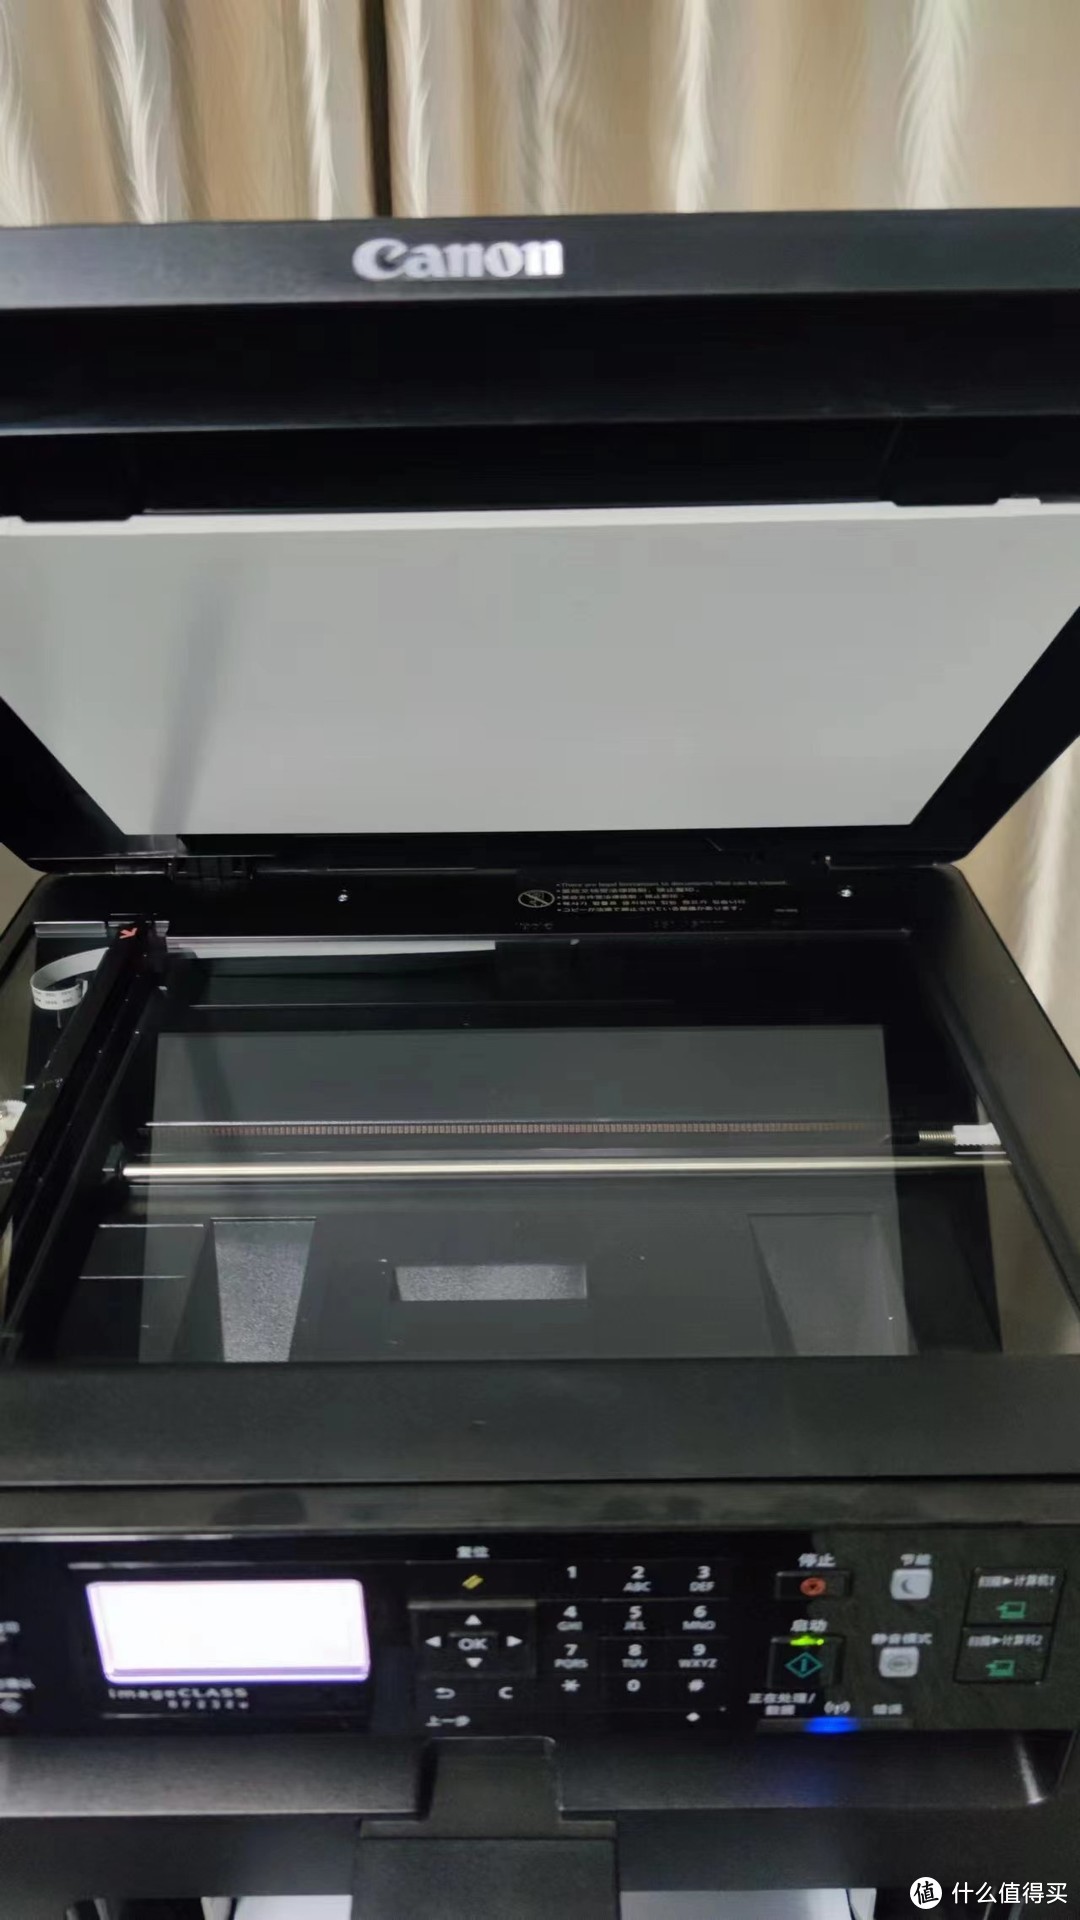 MF232w 黑白激光打印机：快速高效，轻松应对办公需求